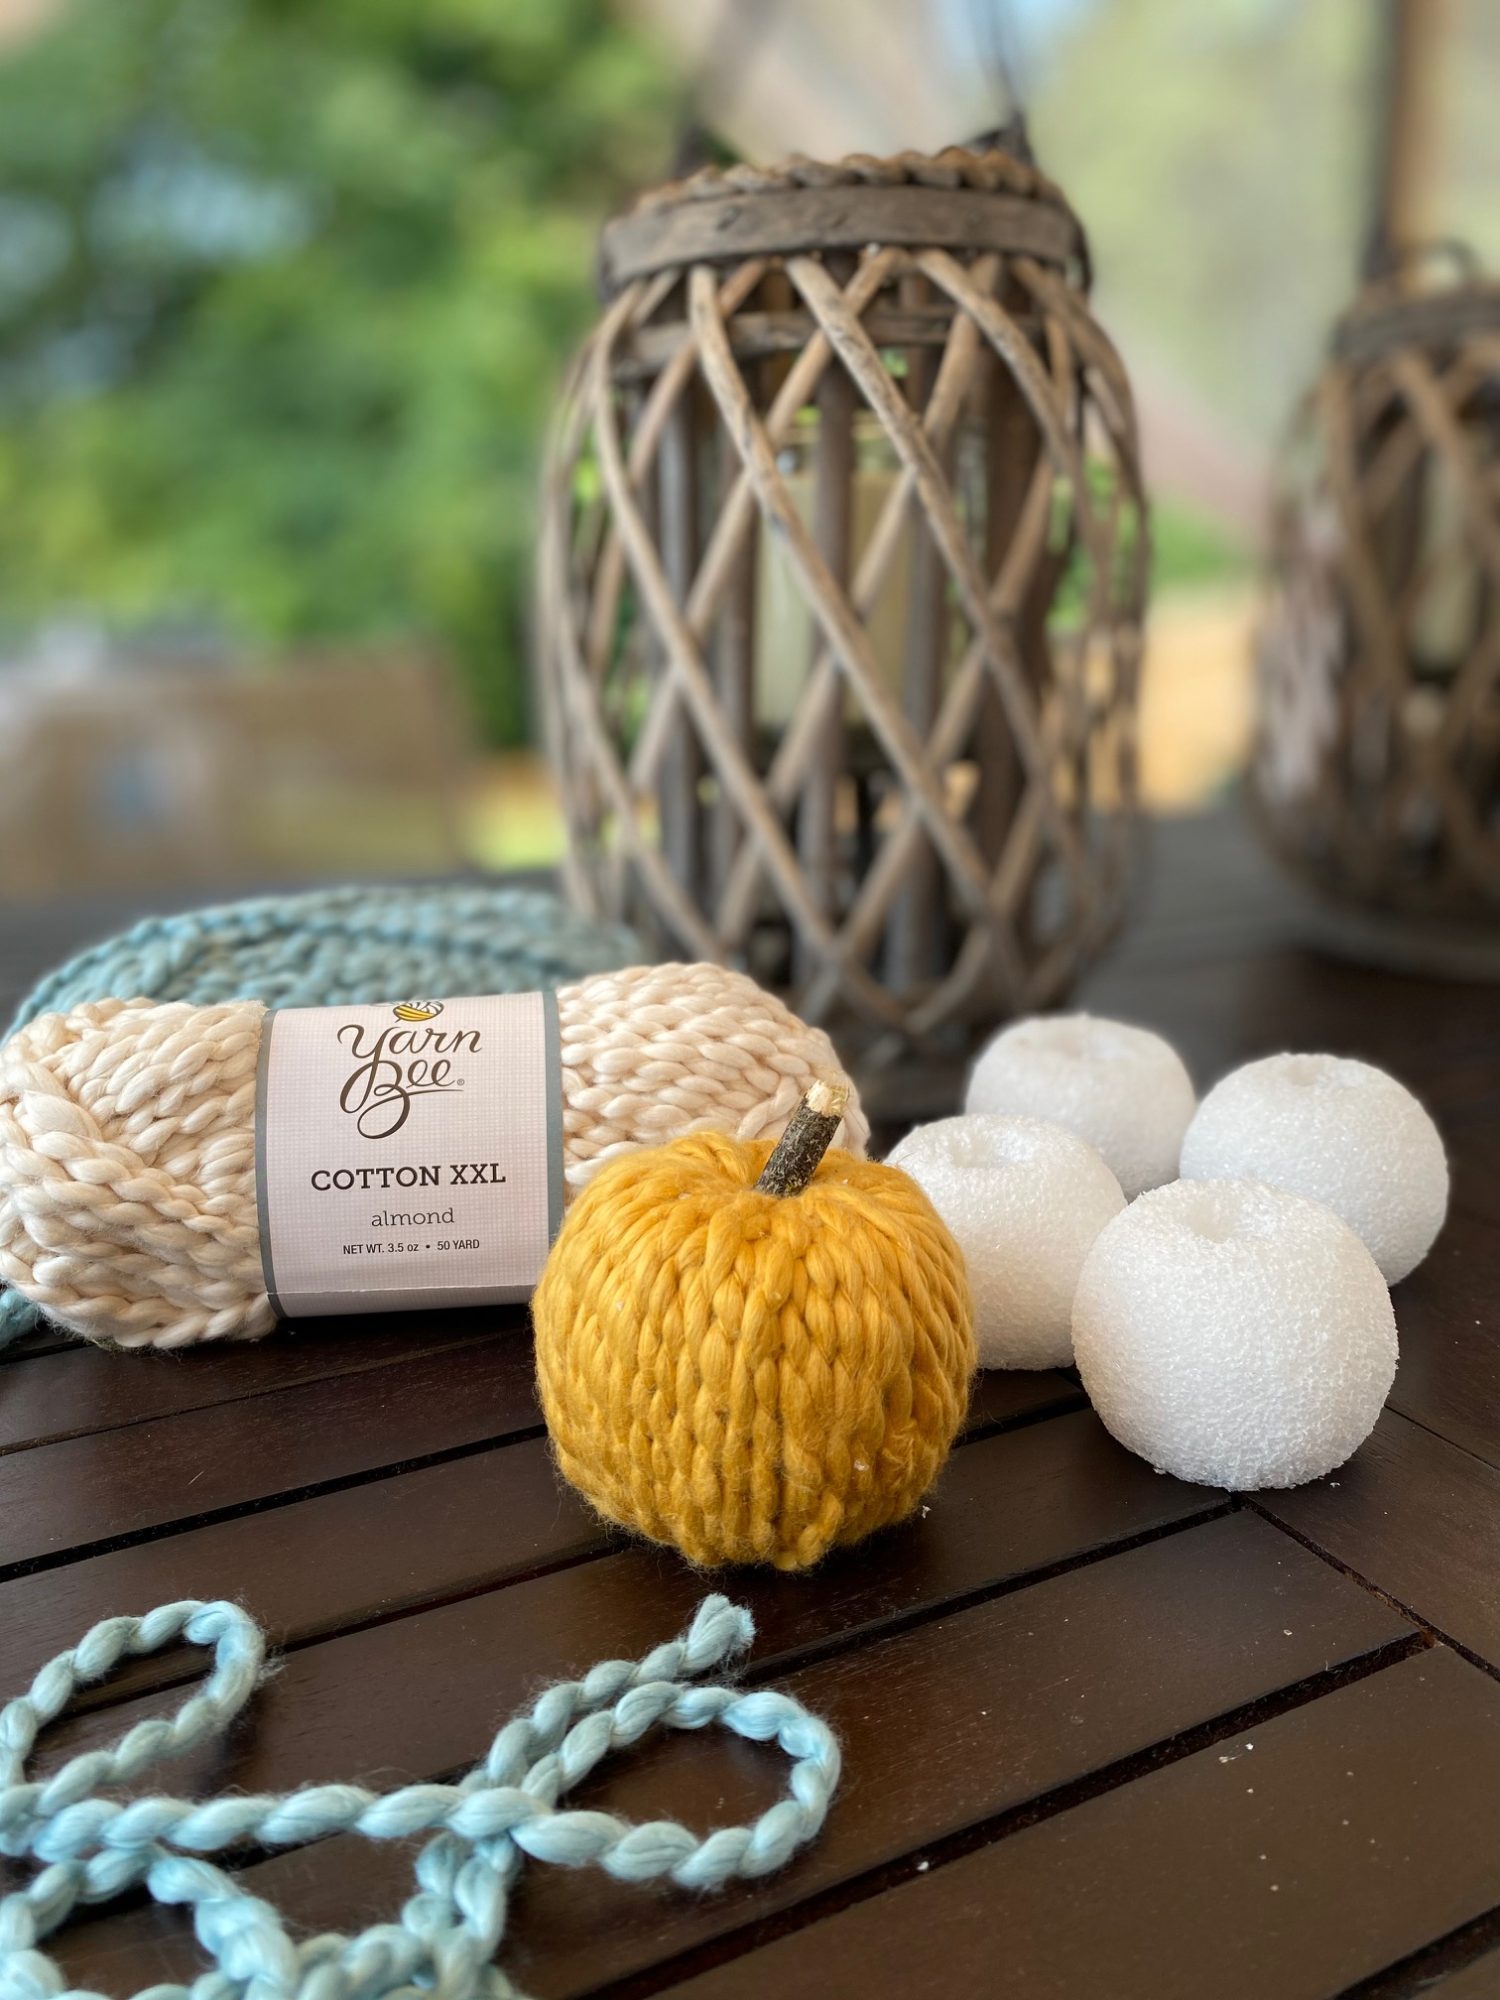 Supplies to make DIY yarn pumpkins